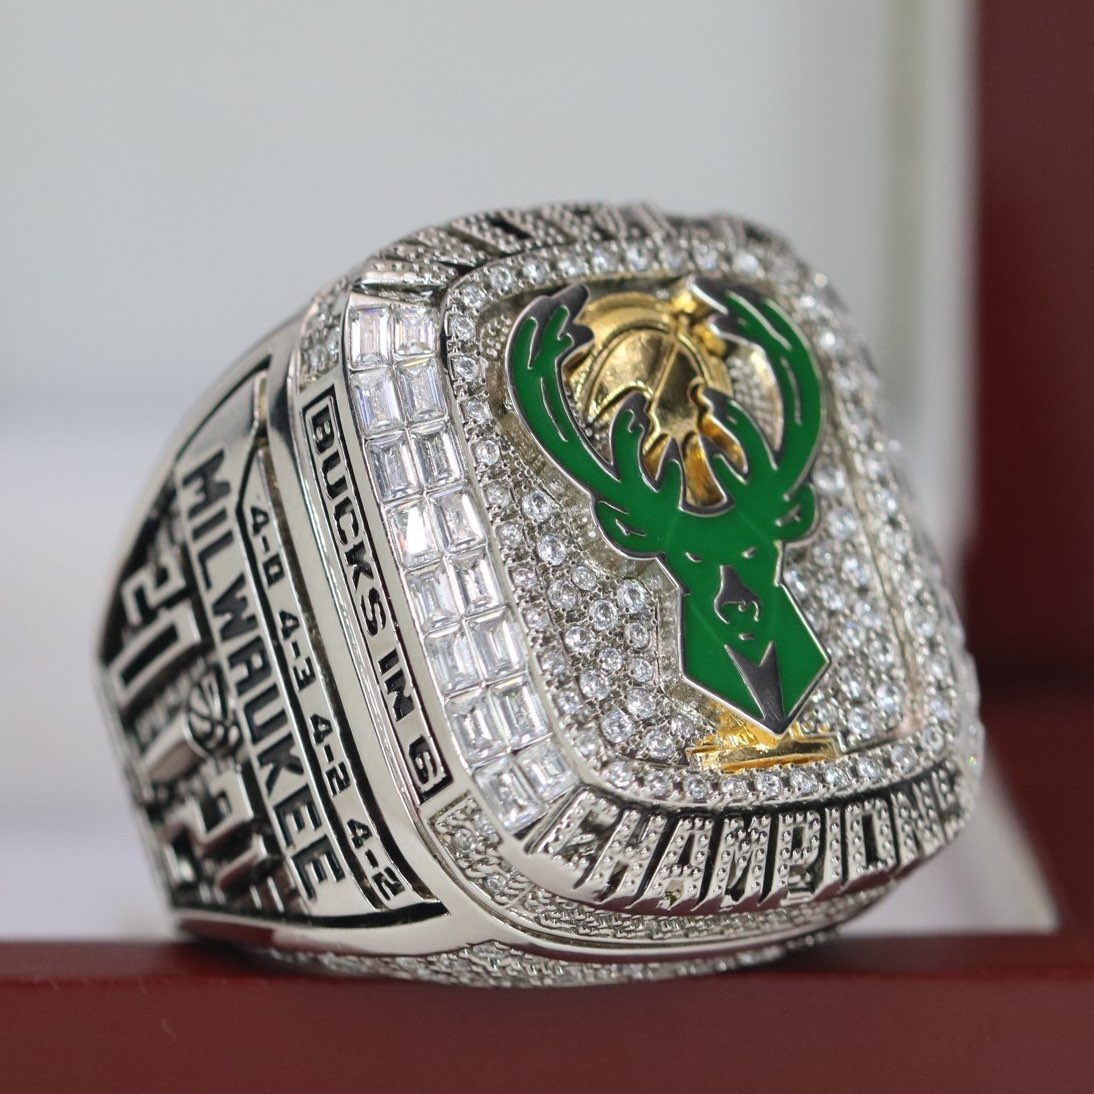 Milwaukee Bucks giving away replica championship rings at Fiserv Forum